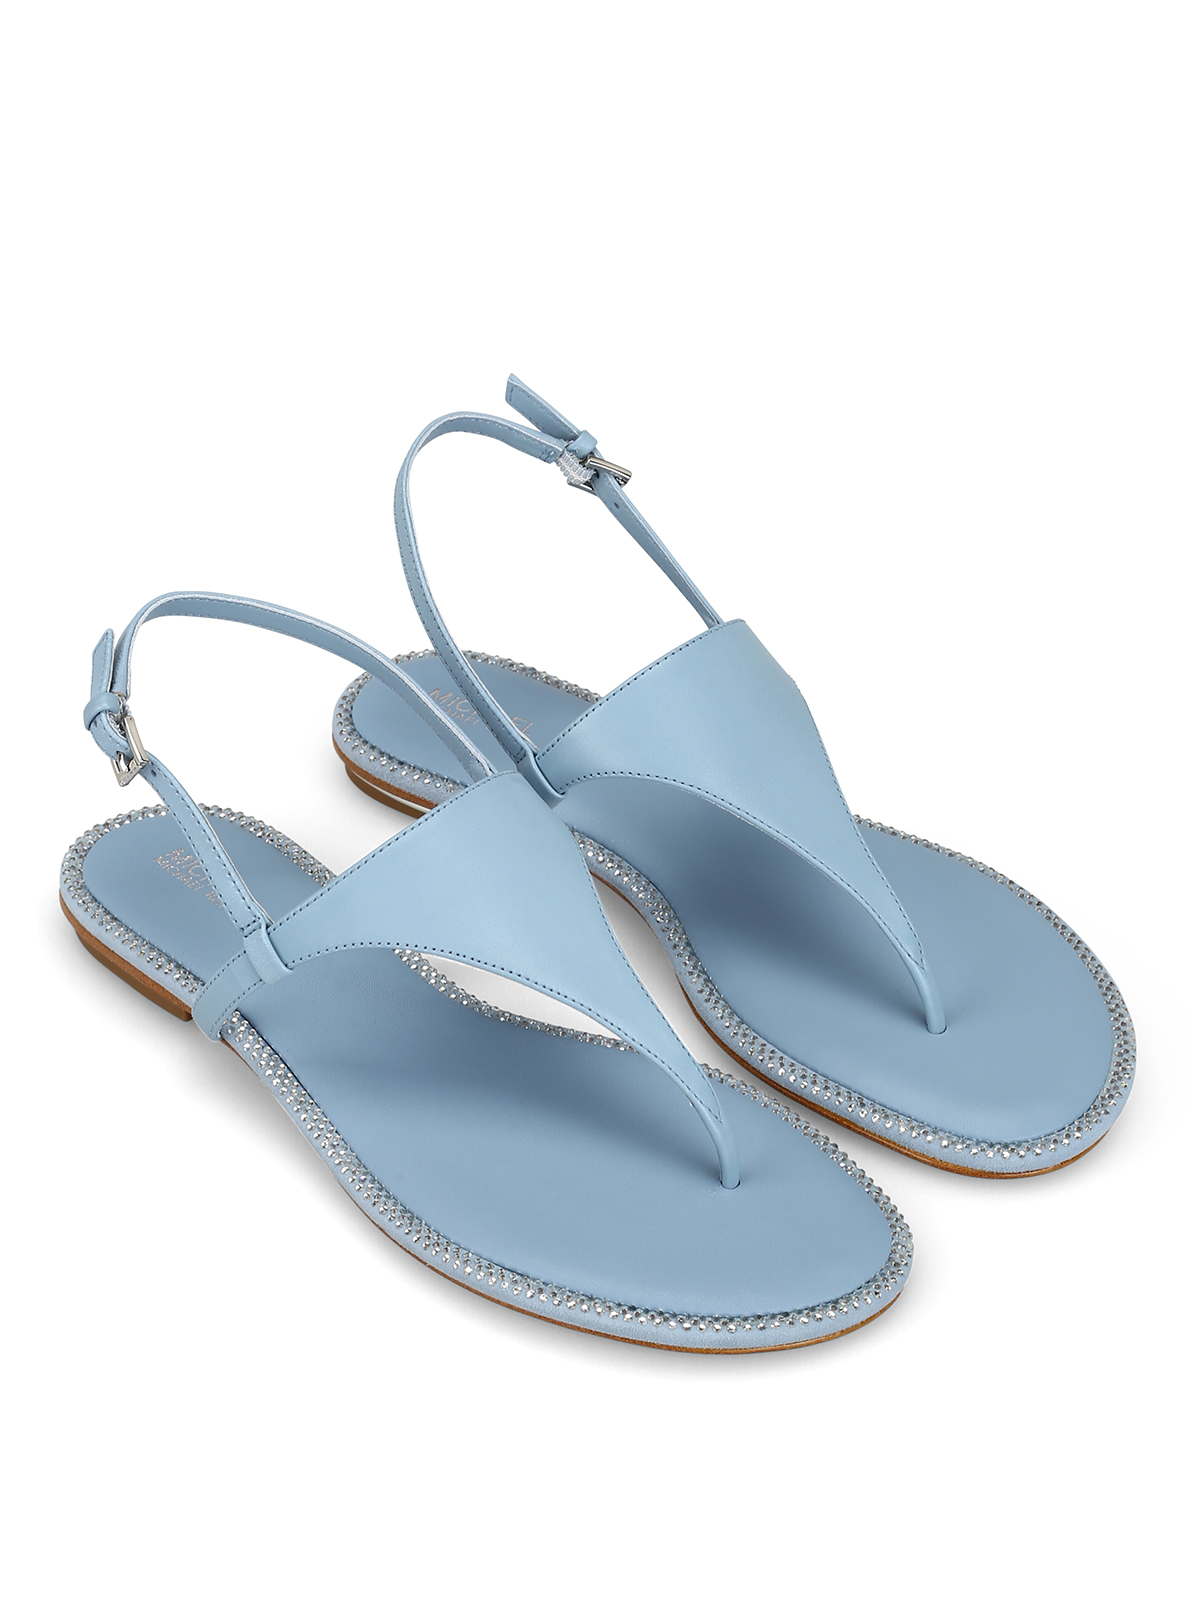 michael kors sandals blue